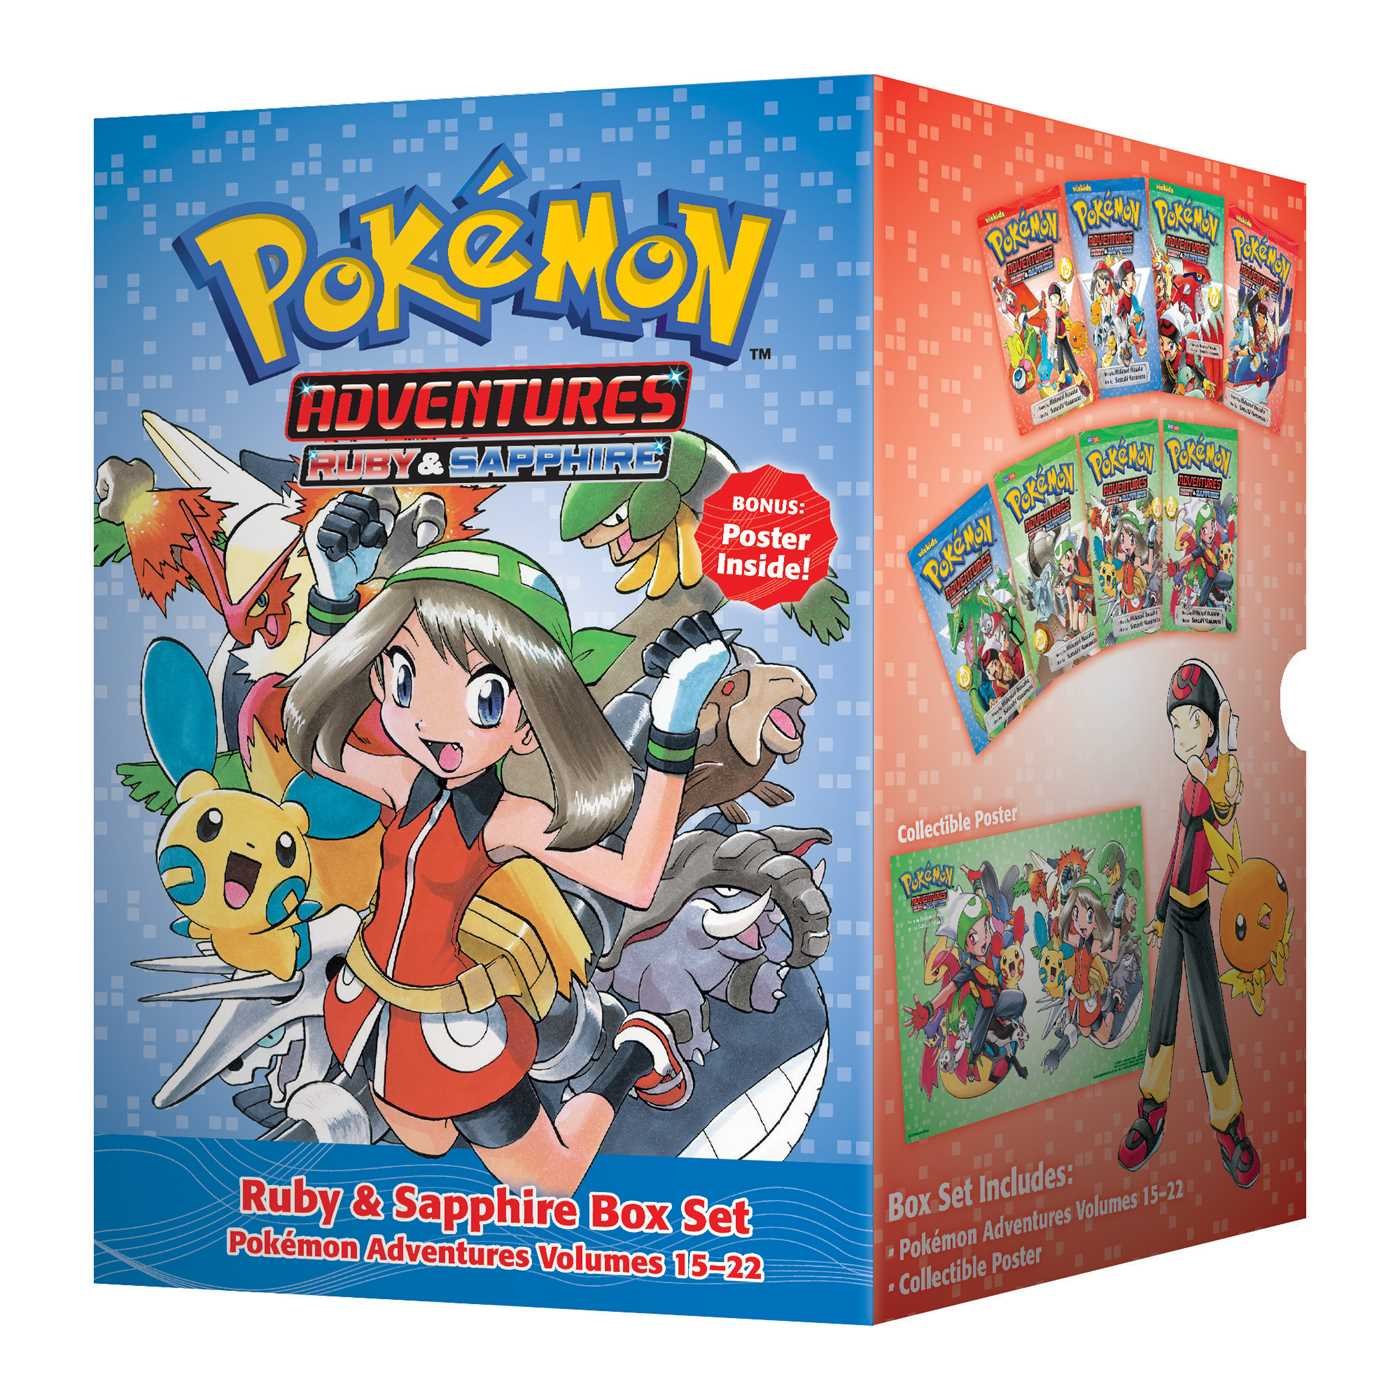 Pokémon Adventures: Diamond and Pearl/Platinum, Vol. 10, Book by Hidenori  Kusaka, Satoshi Yamamoto, Official Publisher Page